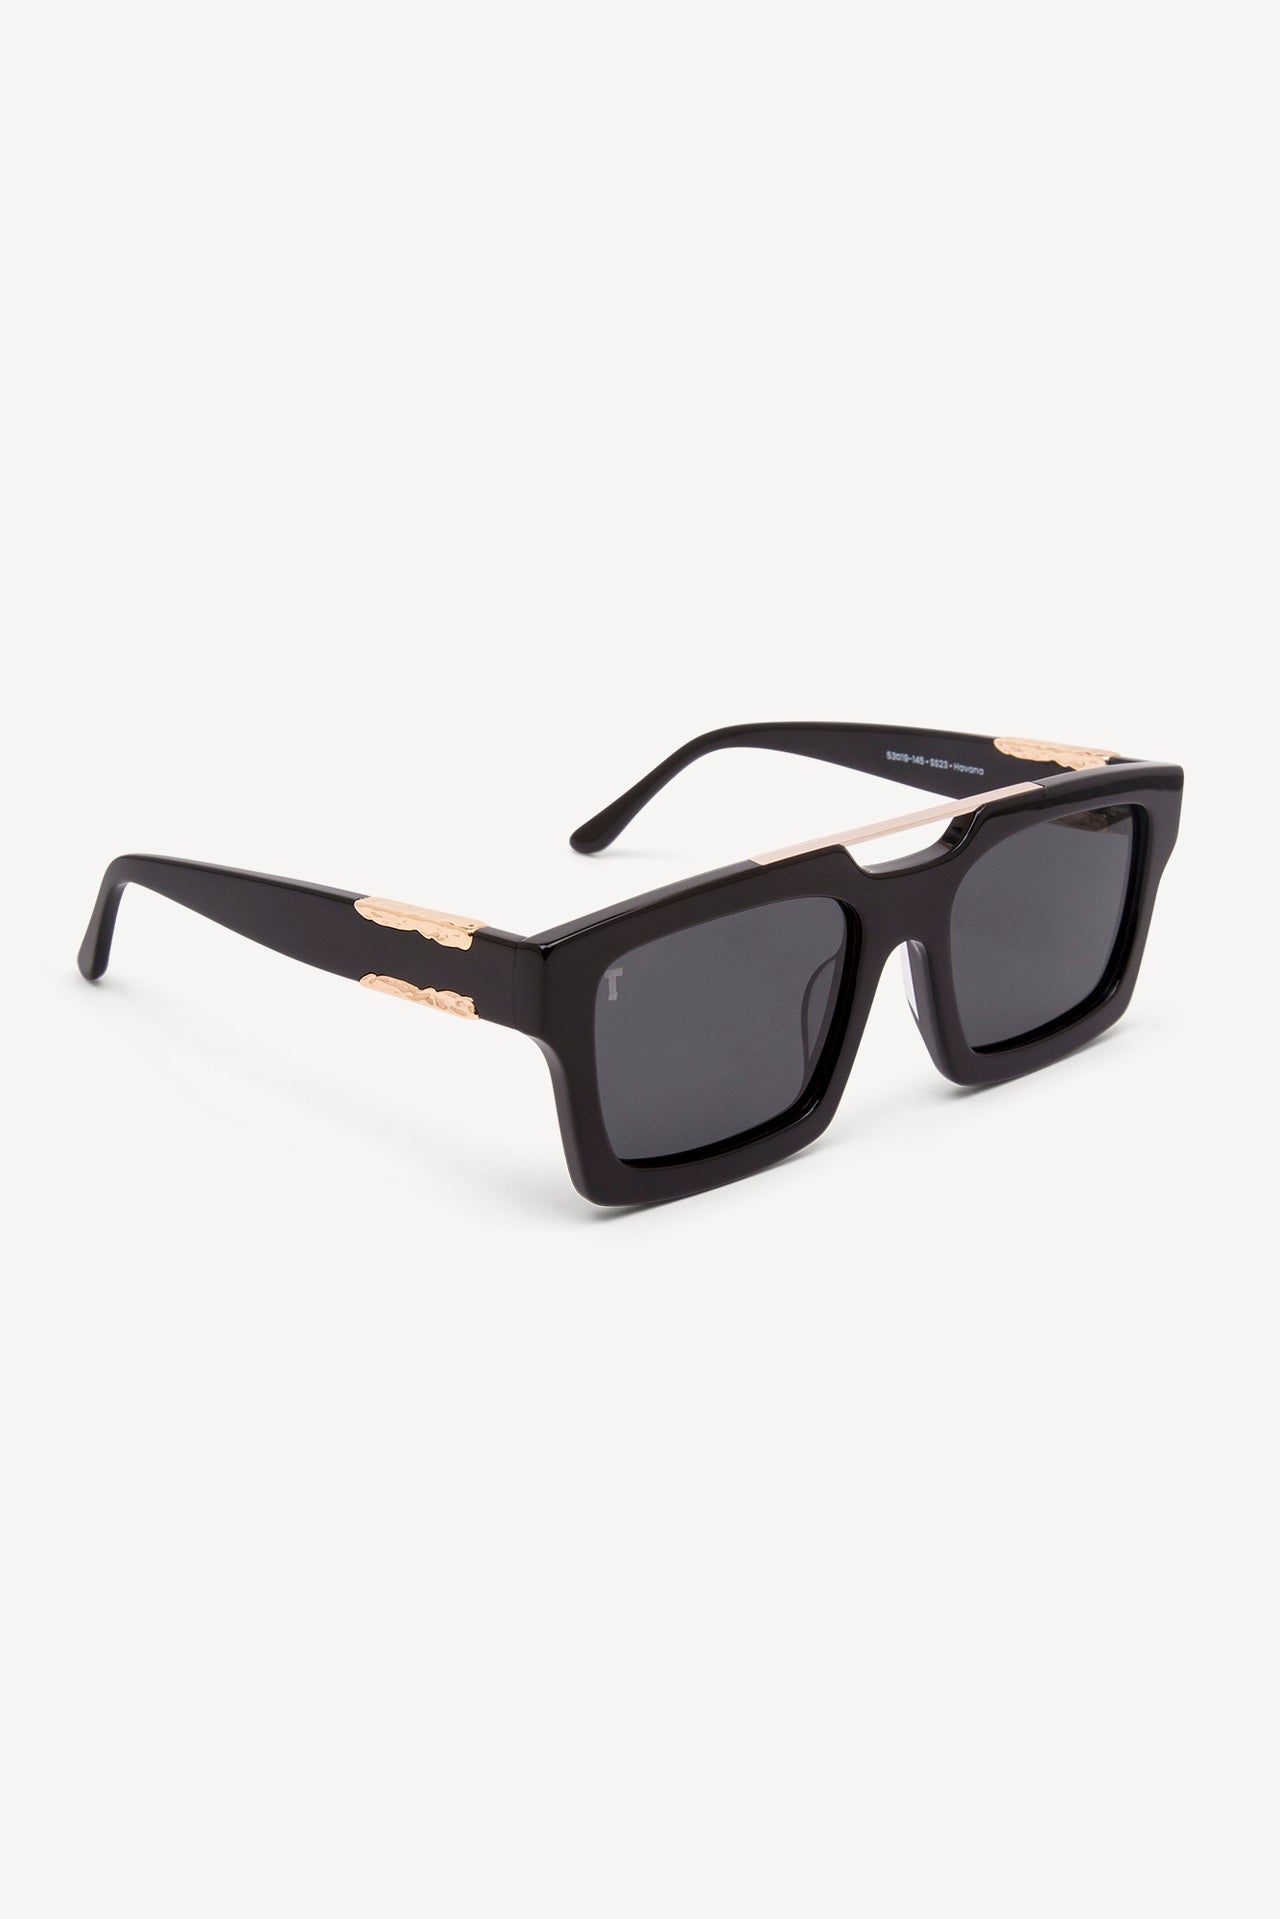 TOATIE Havana Square Sunglasses BLACK/BLACK